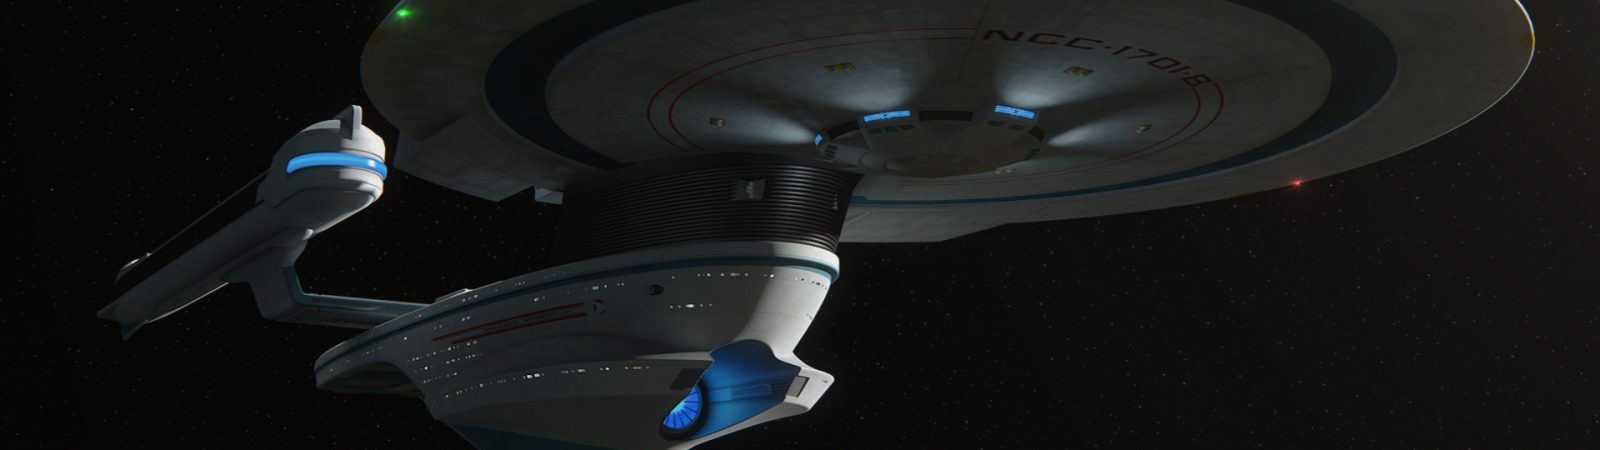 Voyager progress #3